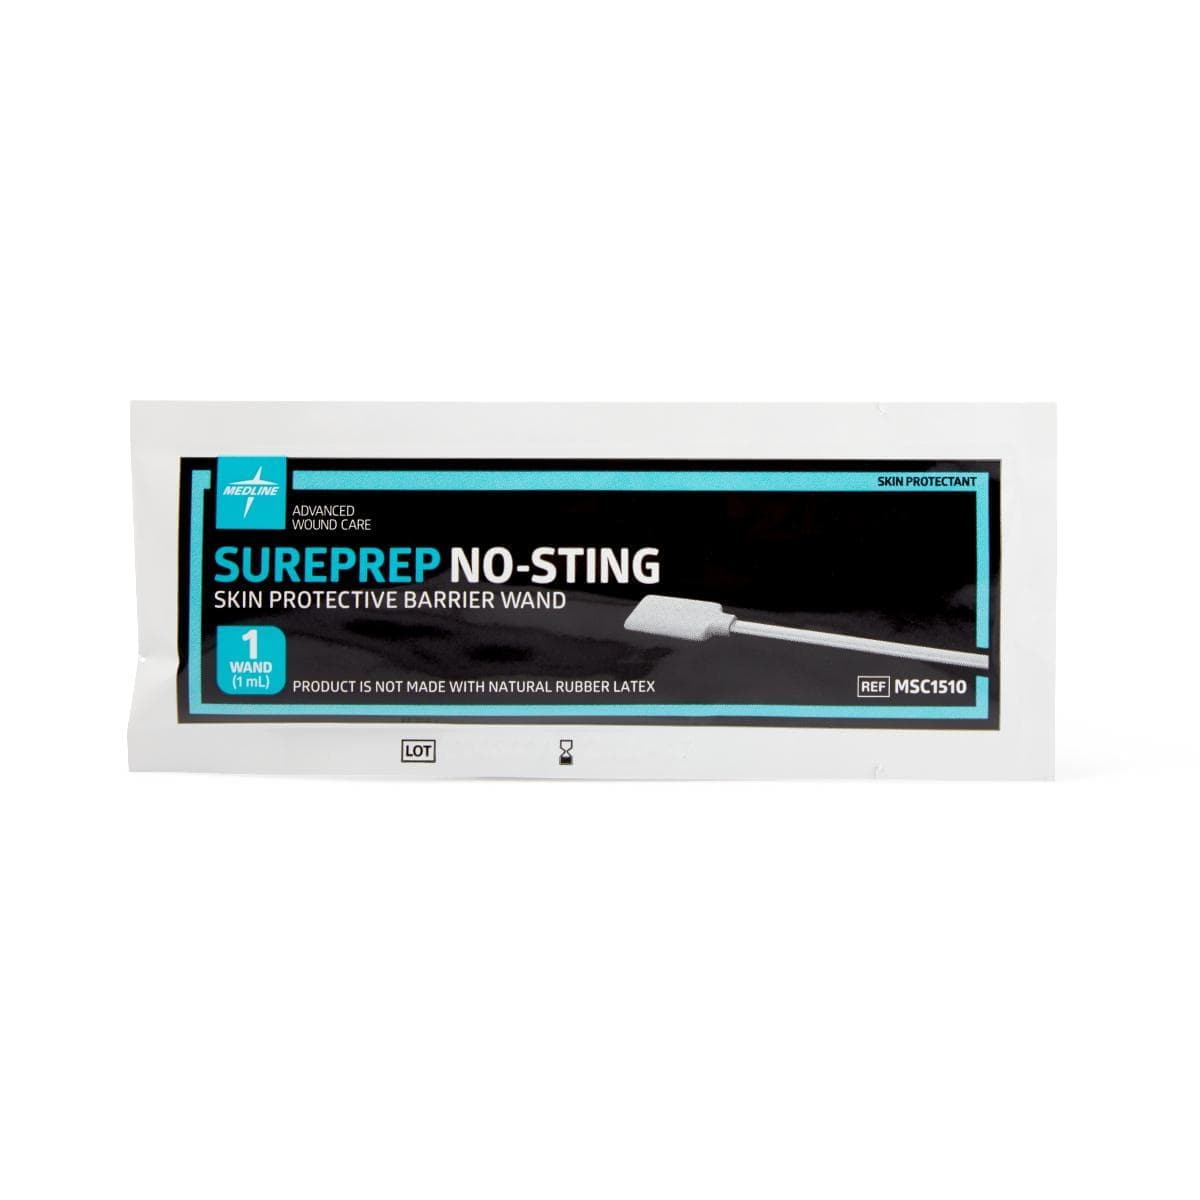 Medline Single Item / 1ML Medline Sureprep No-Sting Skin Protectant